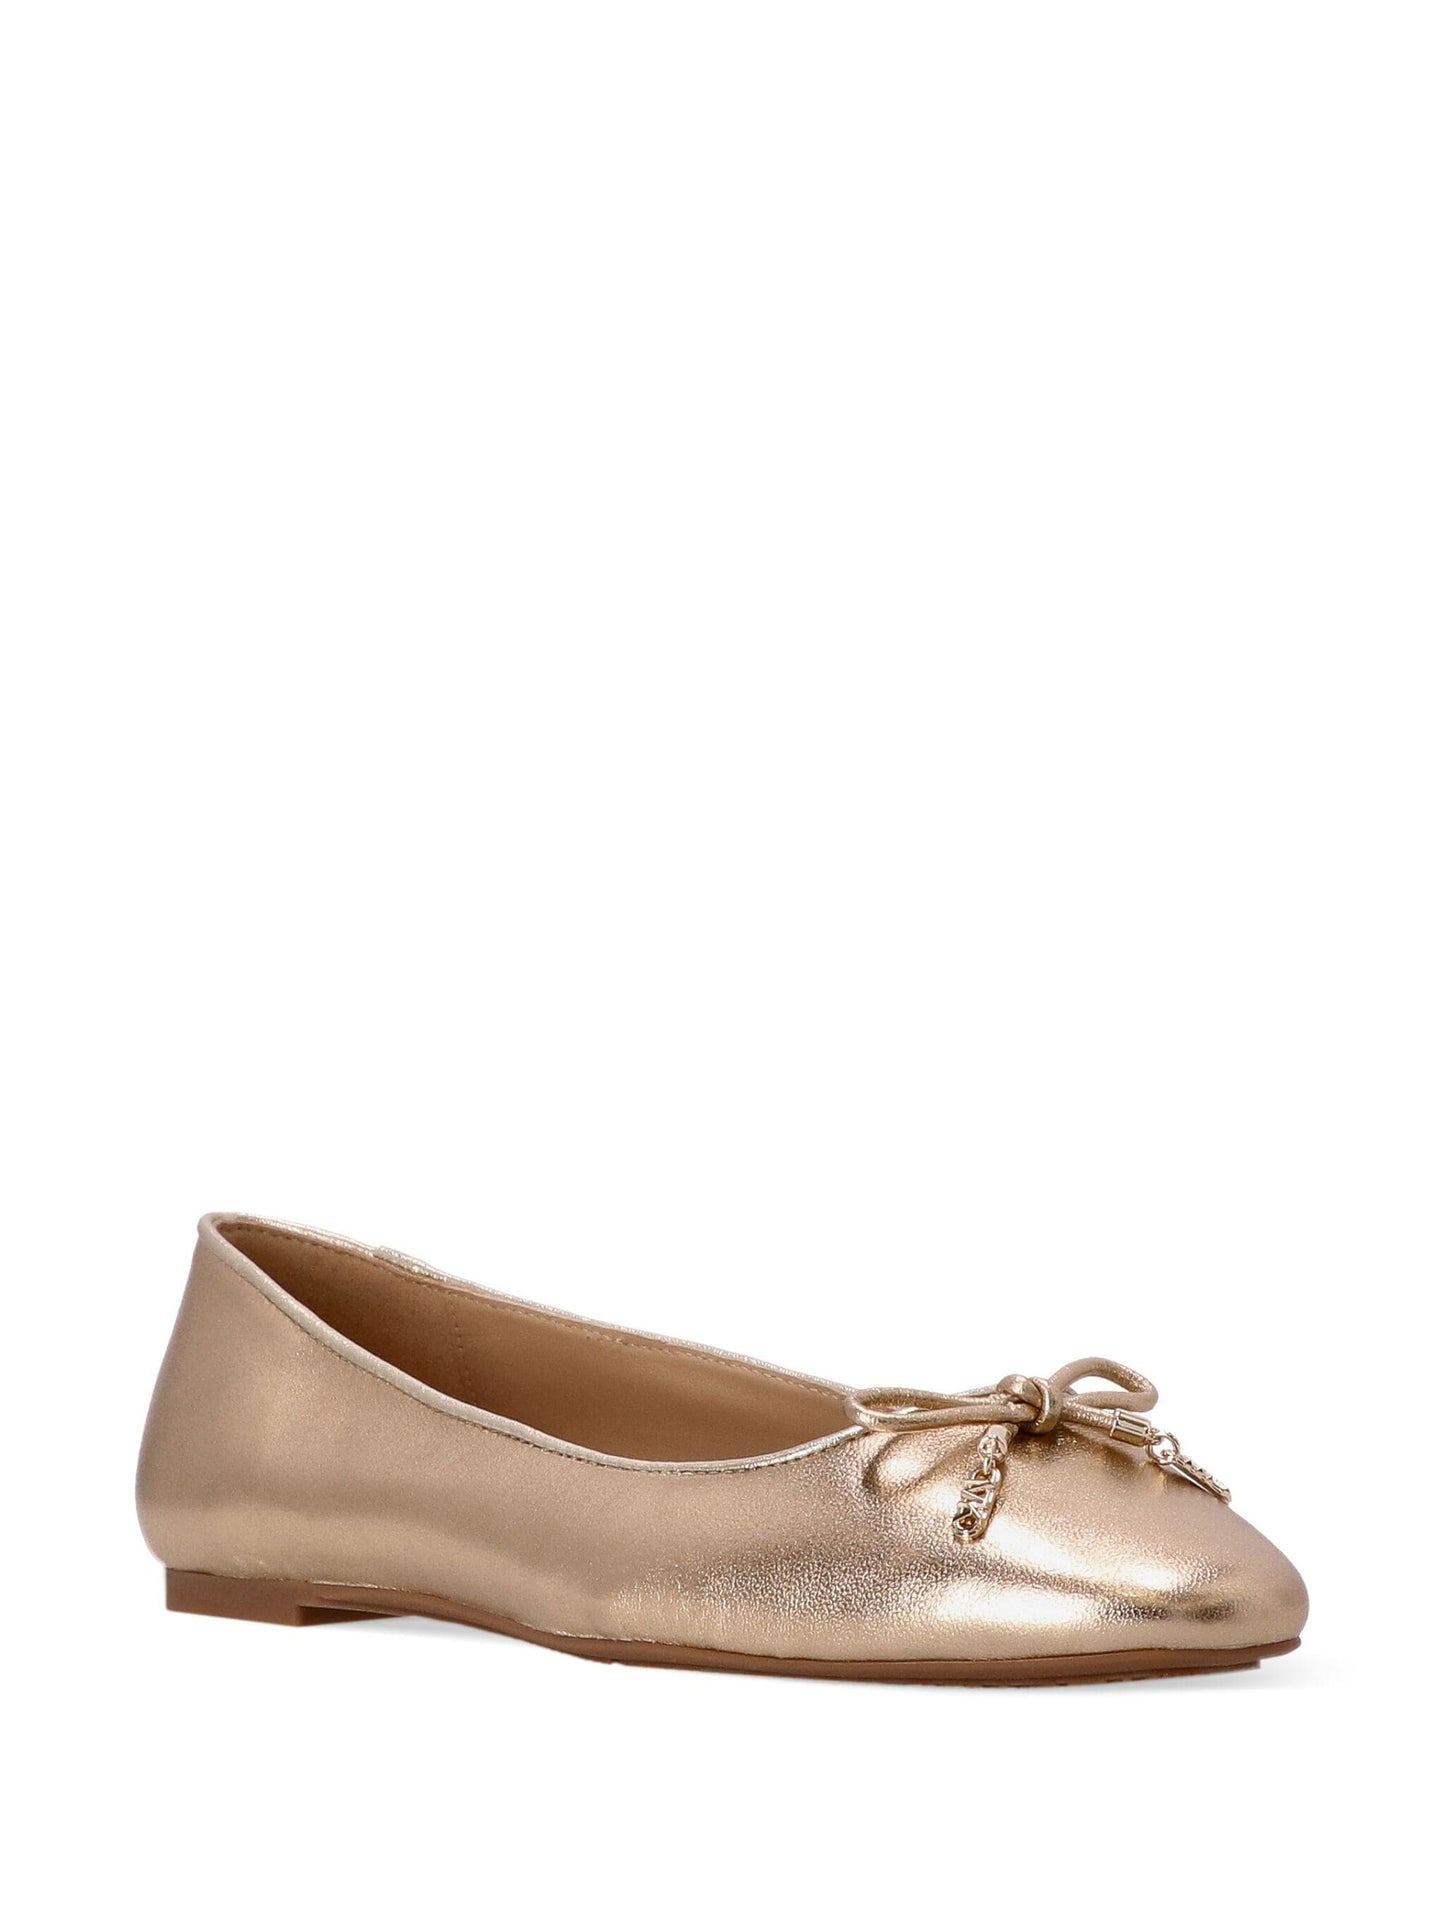 MICHAEL KORS Nori Gold Ballet Flat Shoe